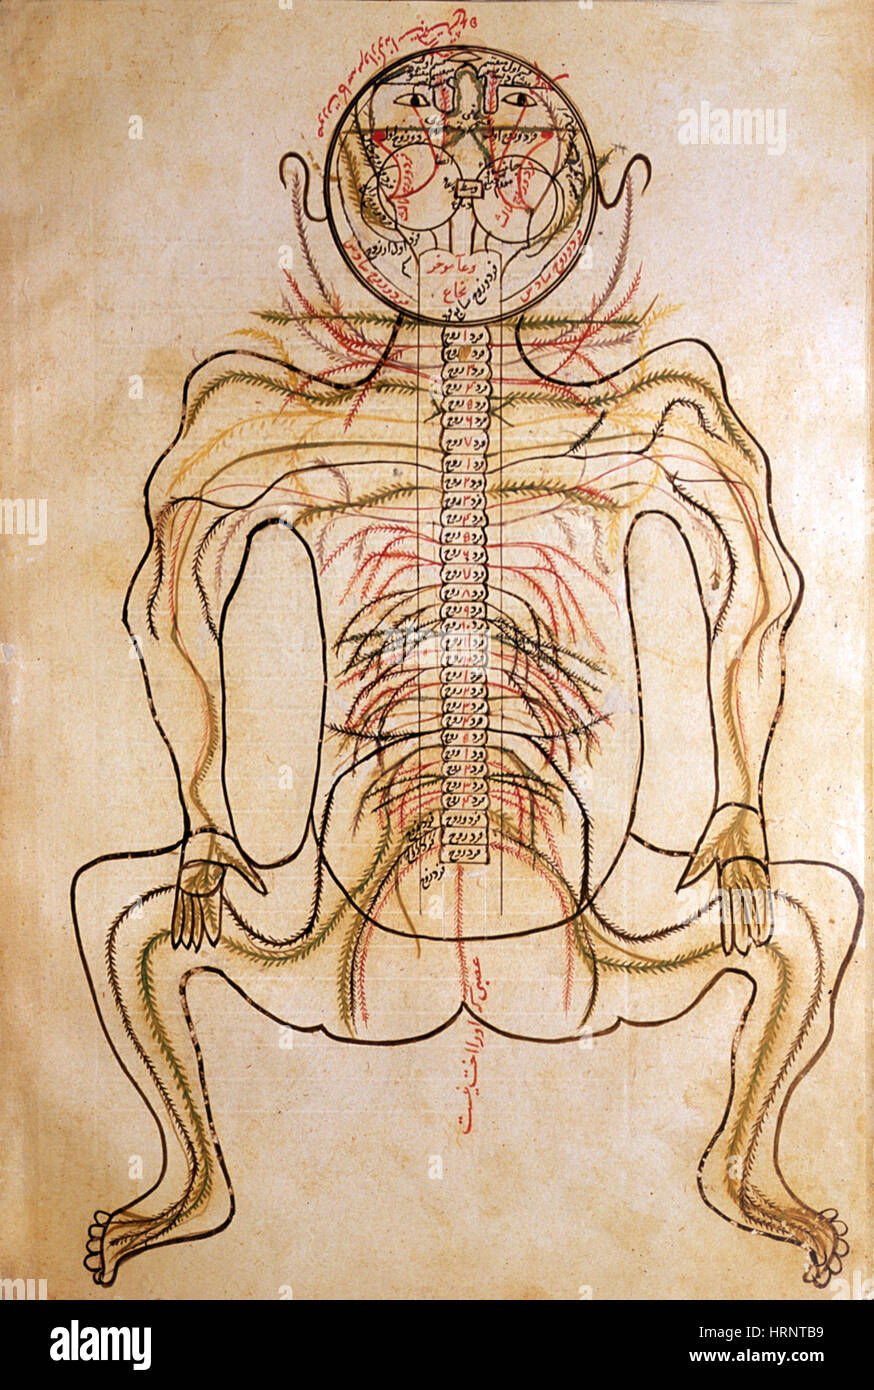 Human Nervous System, 15th Century Stock Photo